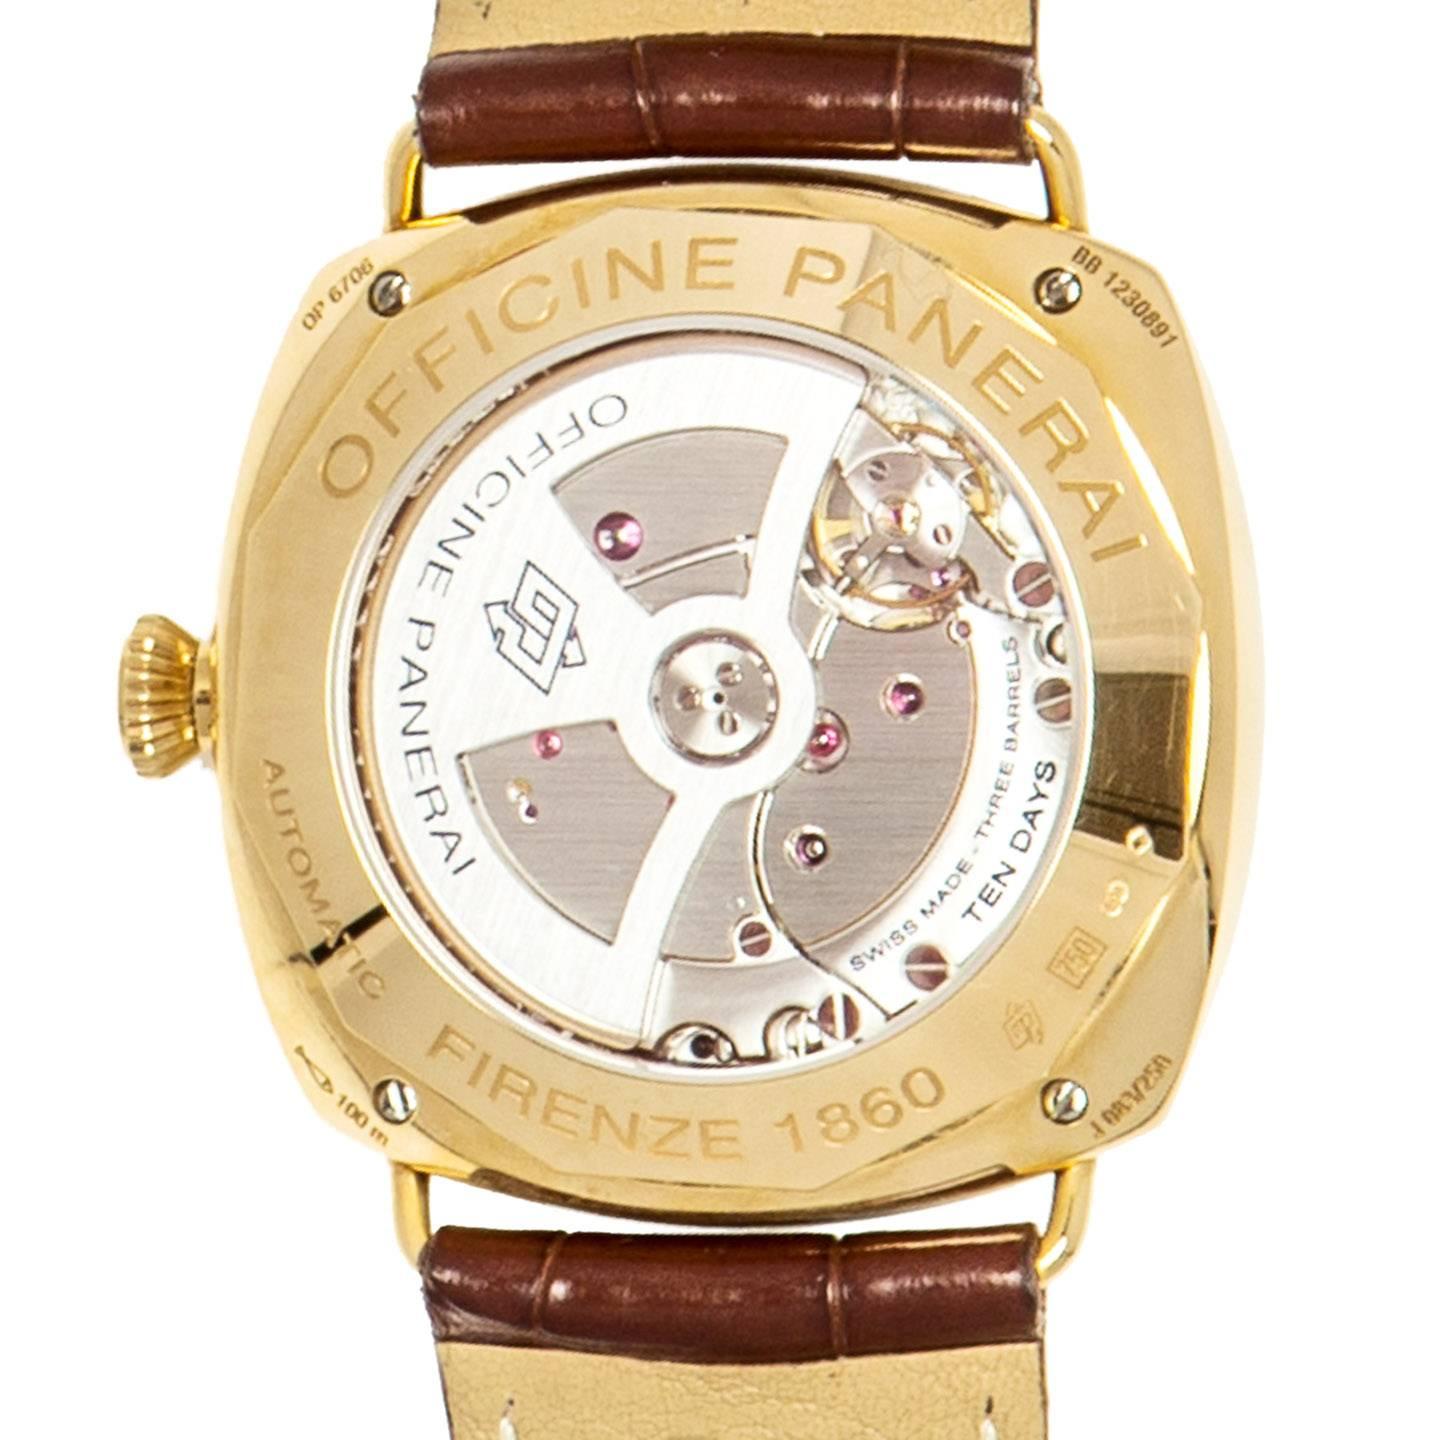 panerai rose gold watch